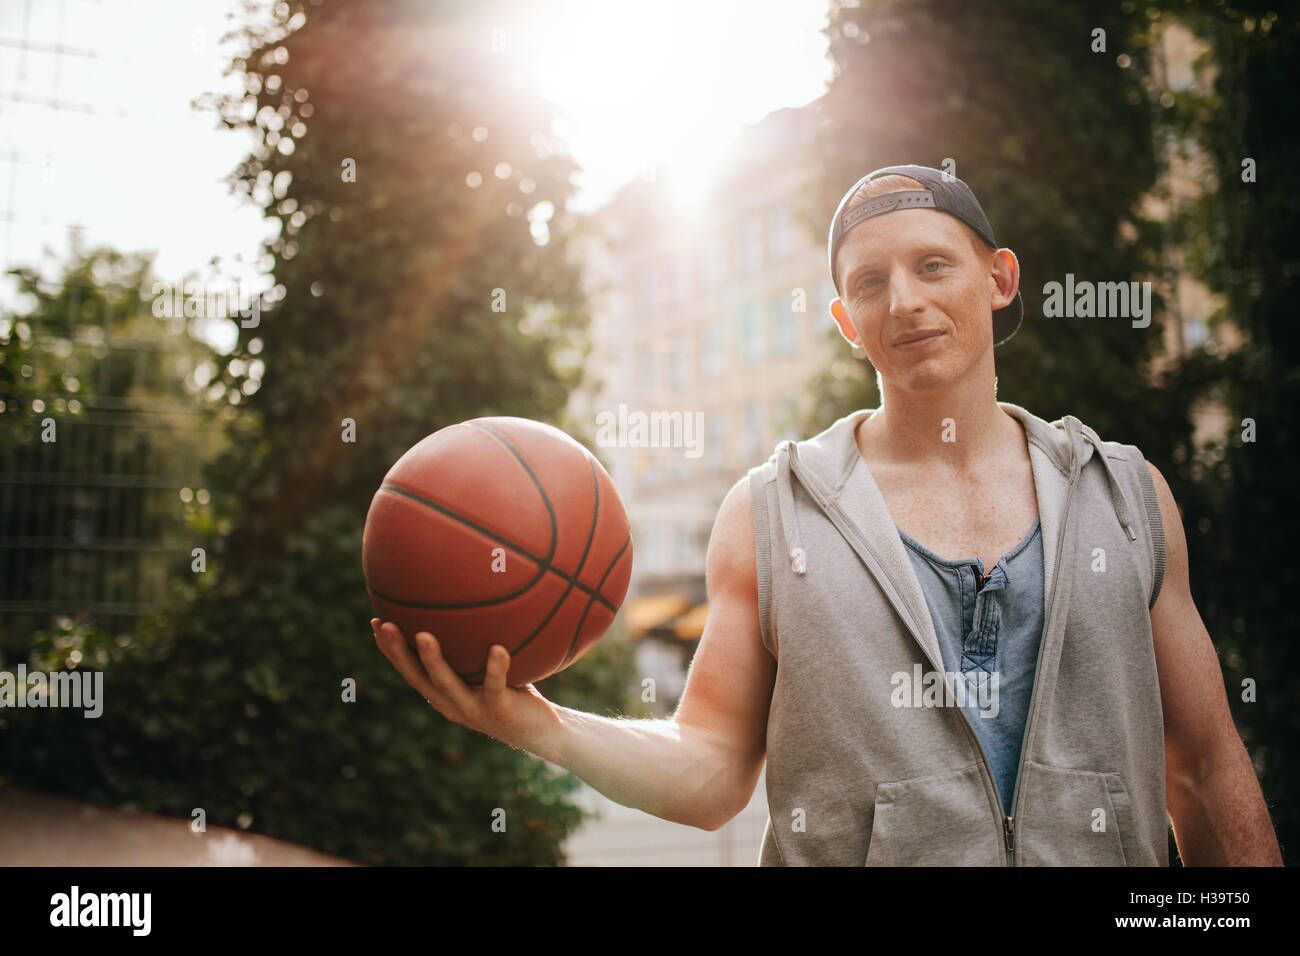 Boy with basketball Stock Photo by ©gemenacom 2041334